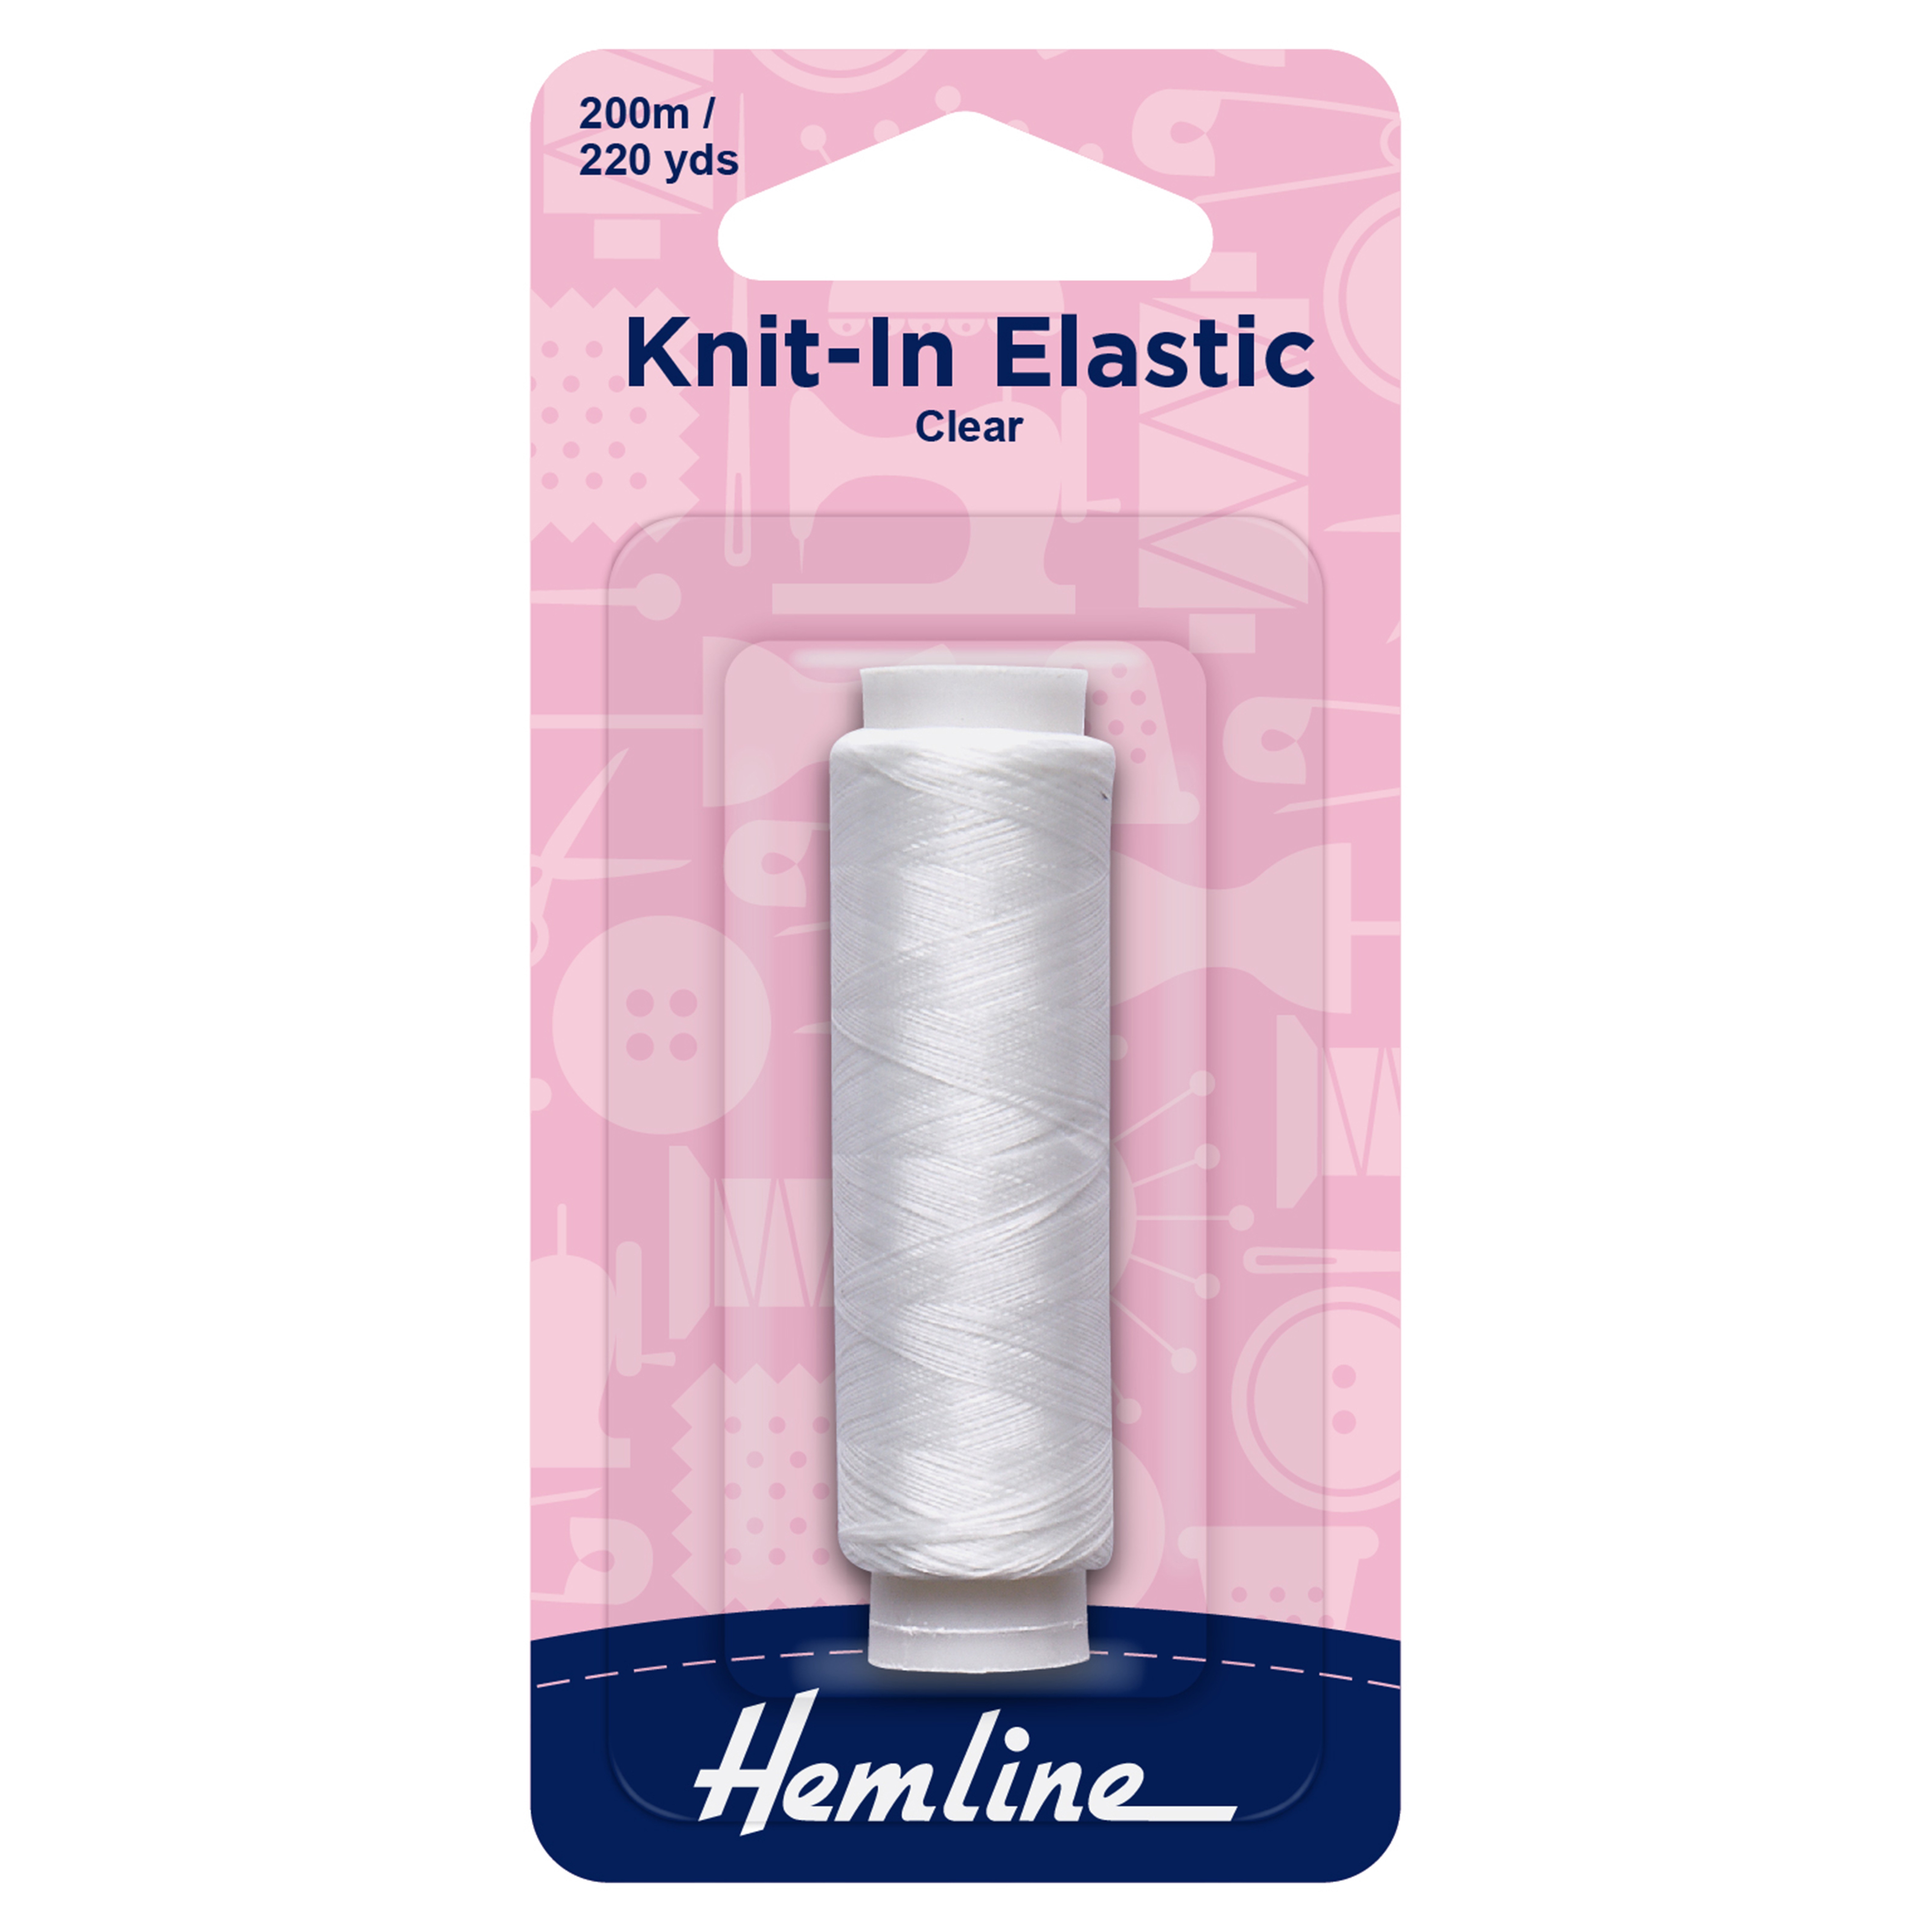 Hemline KnitIn Elastic 200m Clear > Elastic > Barnyarns Ripon LTD